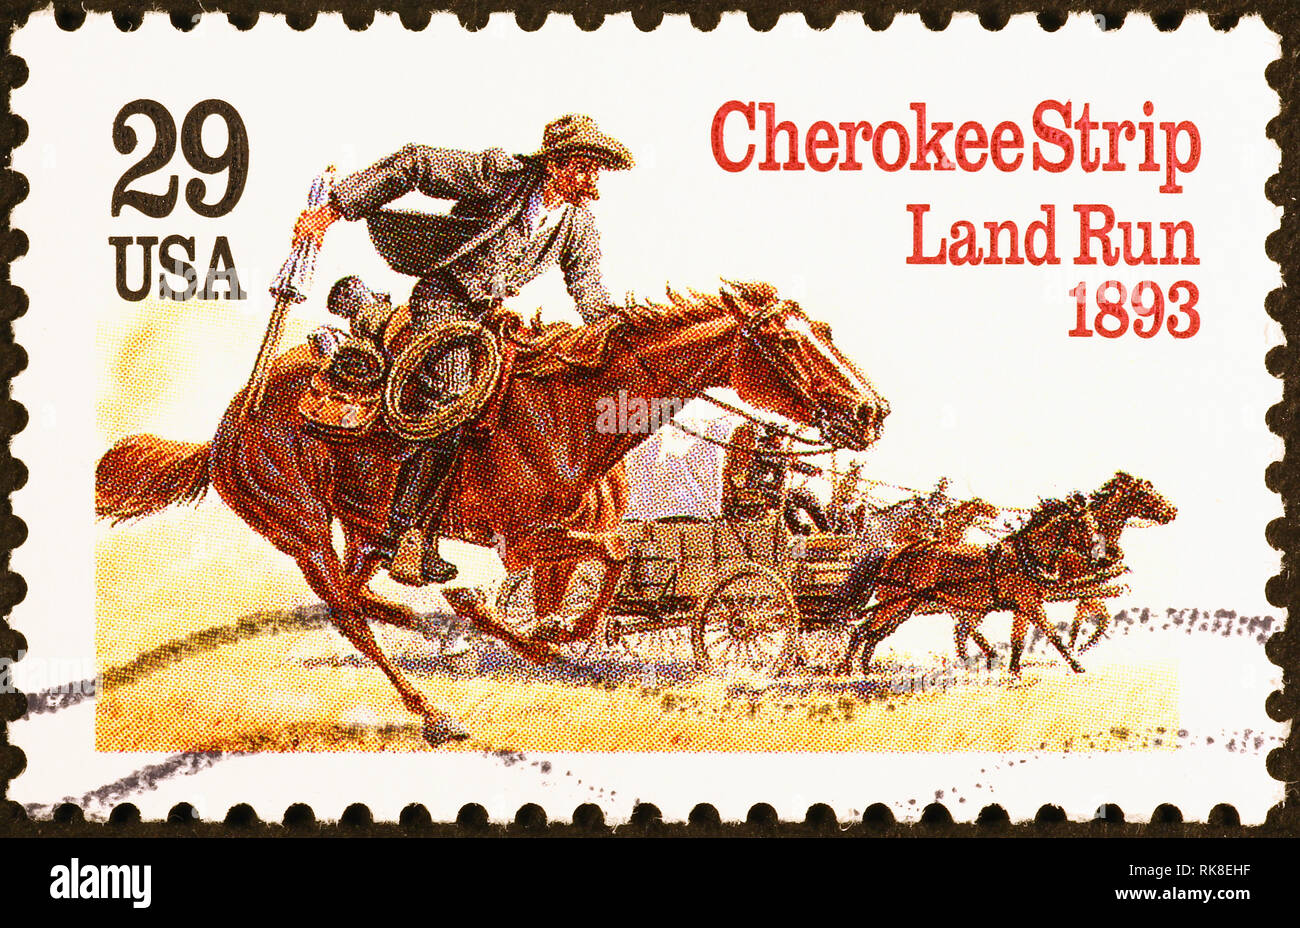 Cherokee strip land run on us postage stamp Stock Photo